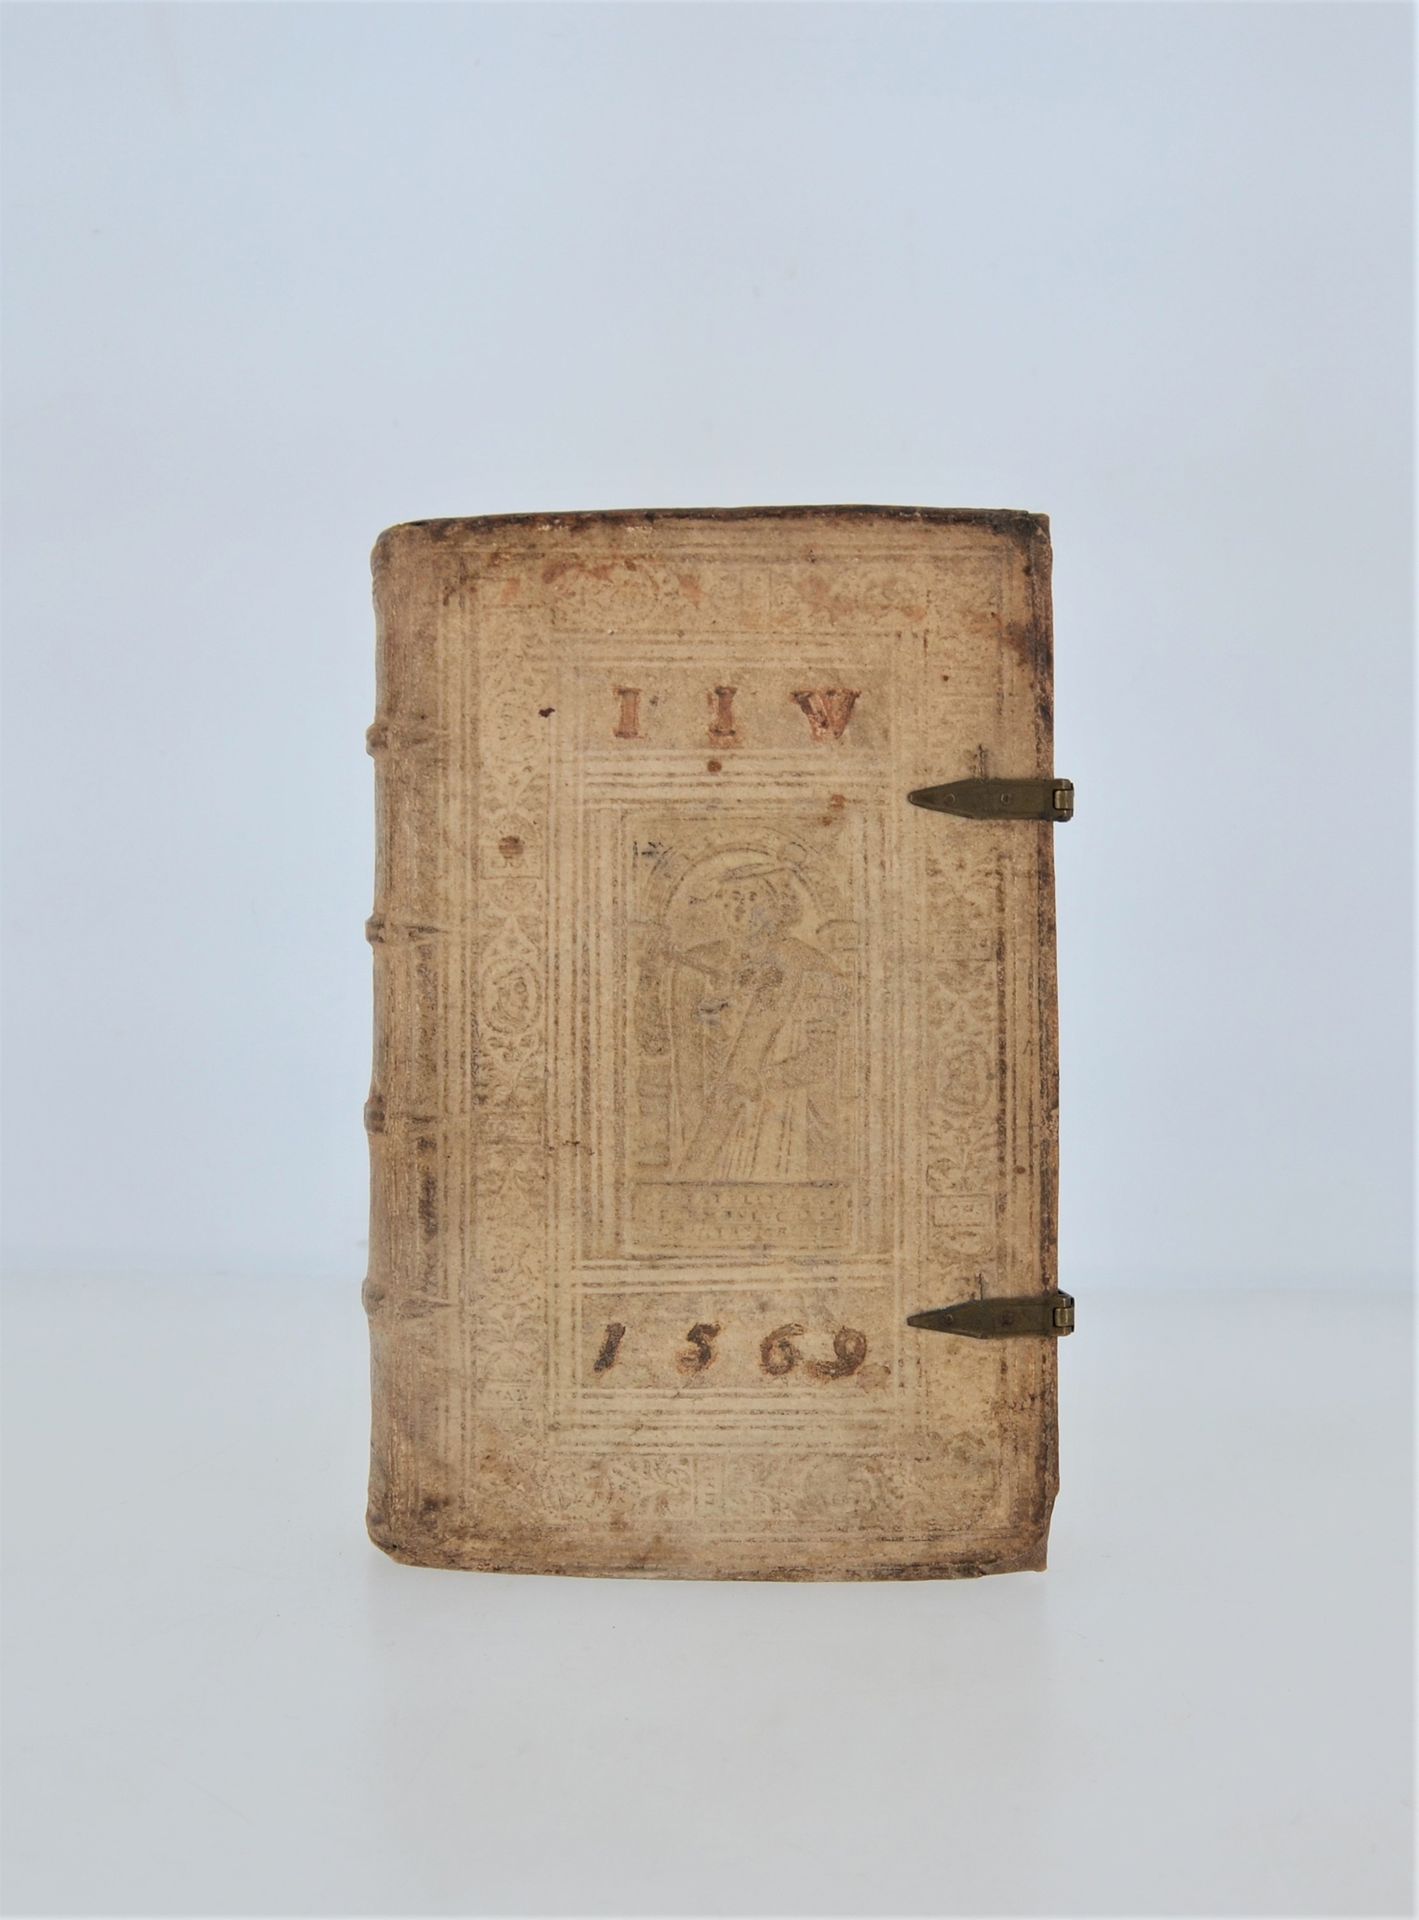 JUSTINIEN Ier. Institutionum libri IIII. Lyon, Antoine Vincent, 1568. In-8, kalt&hellip;